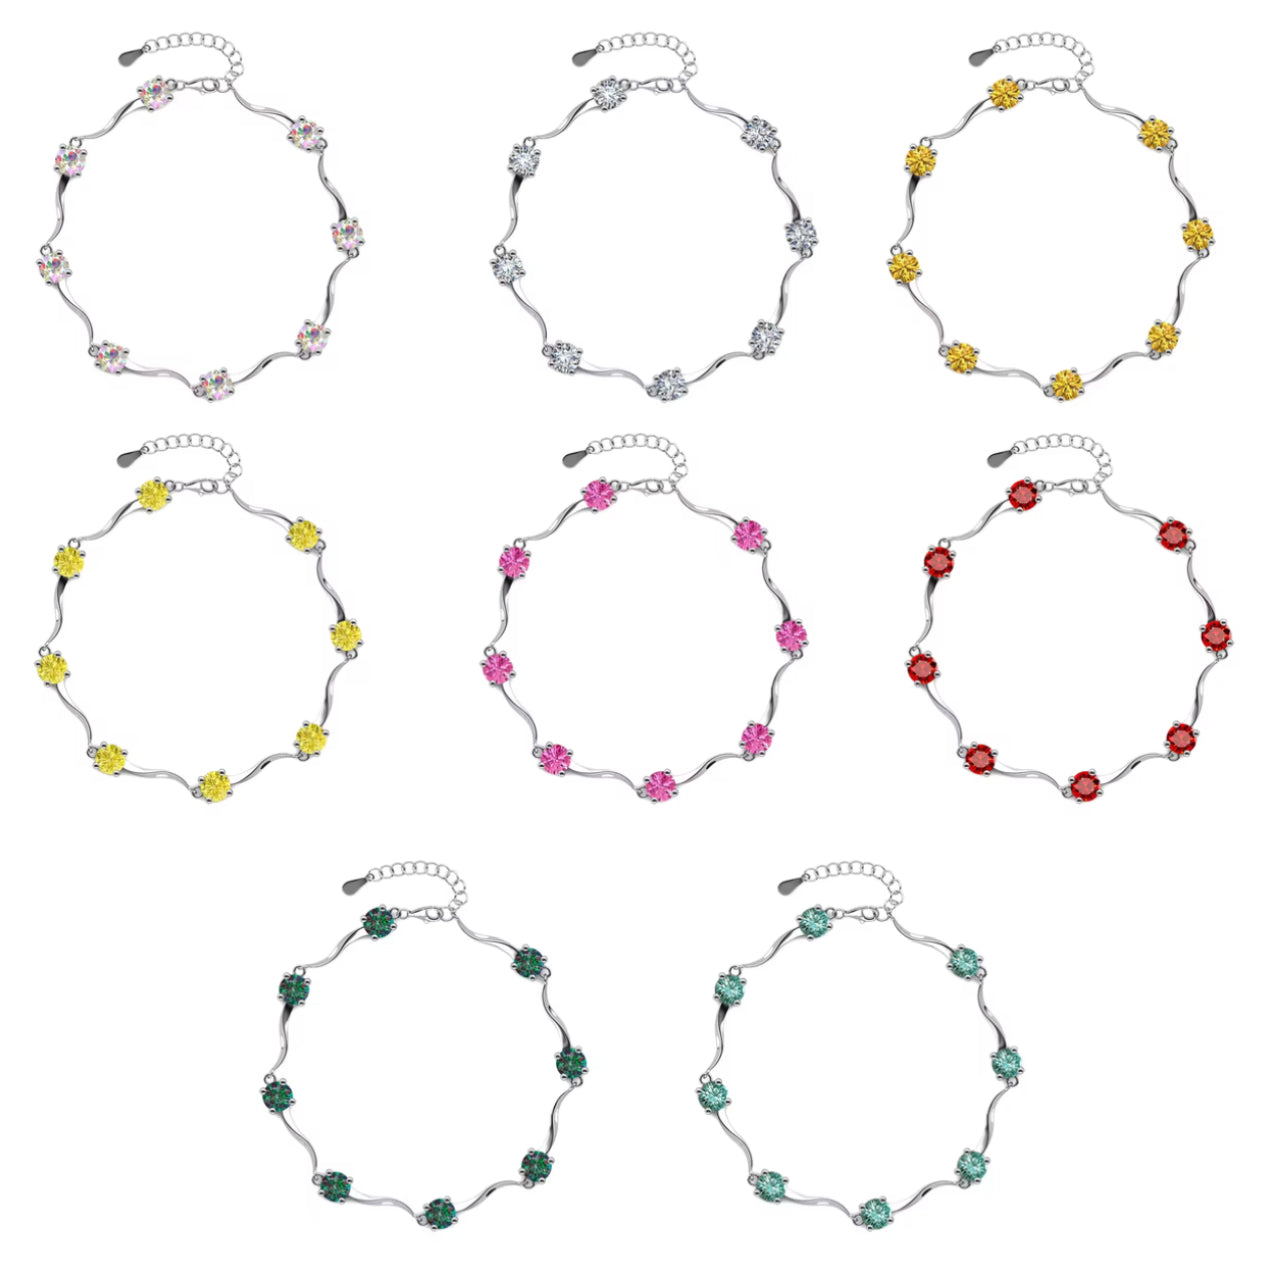 Wave design bracelet in a variety of colors